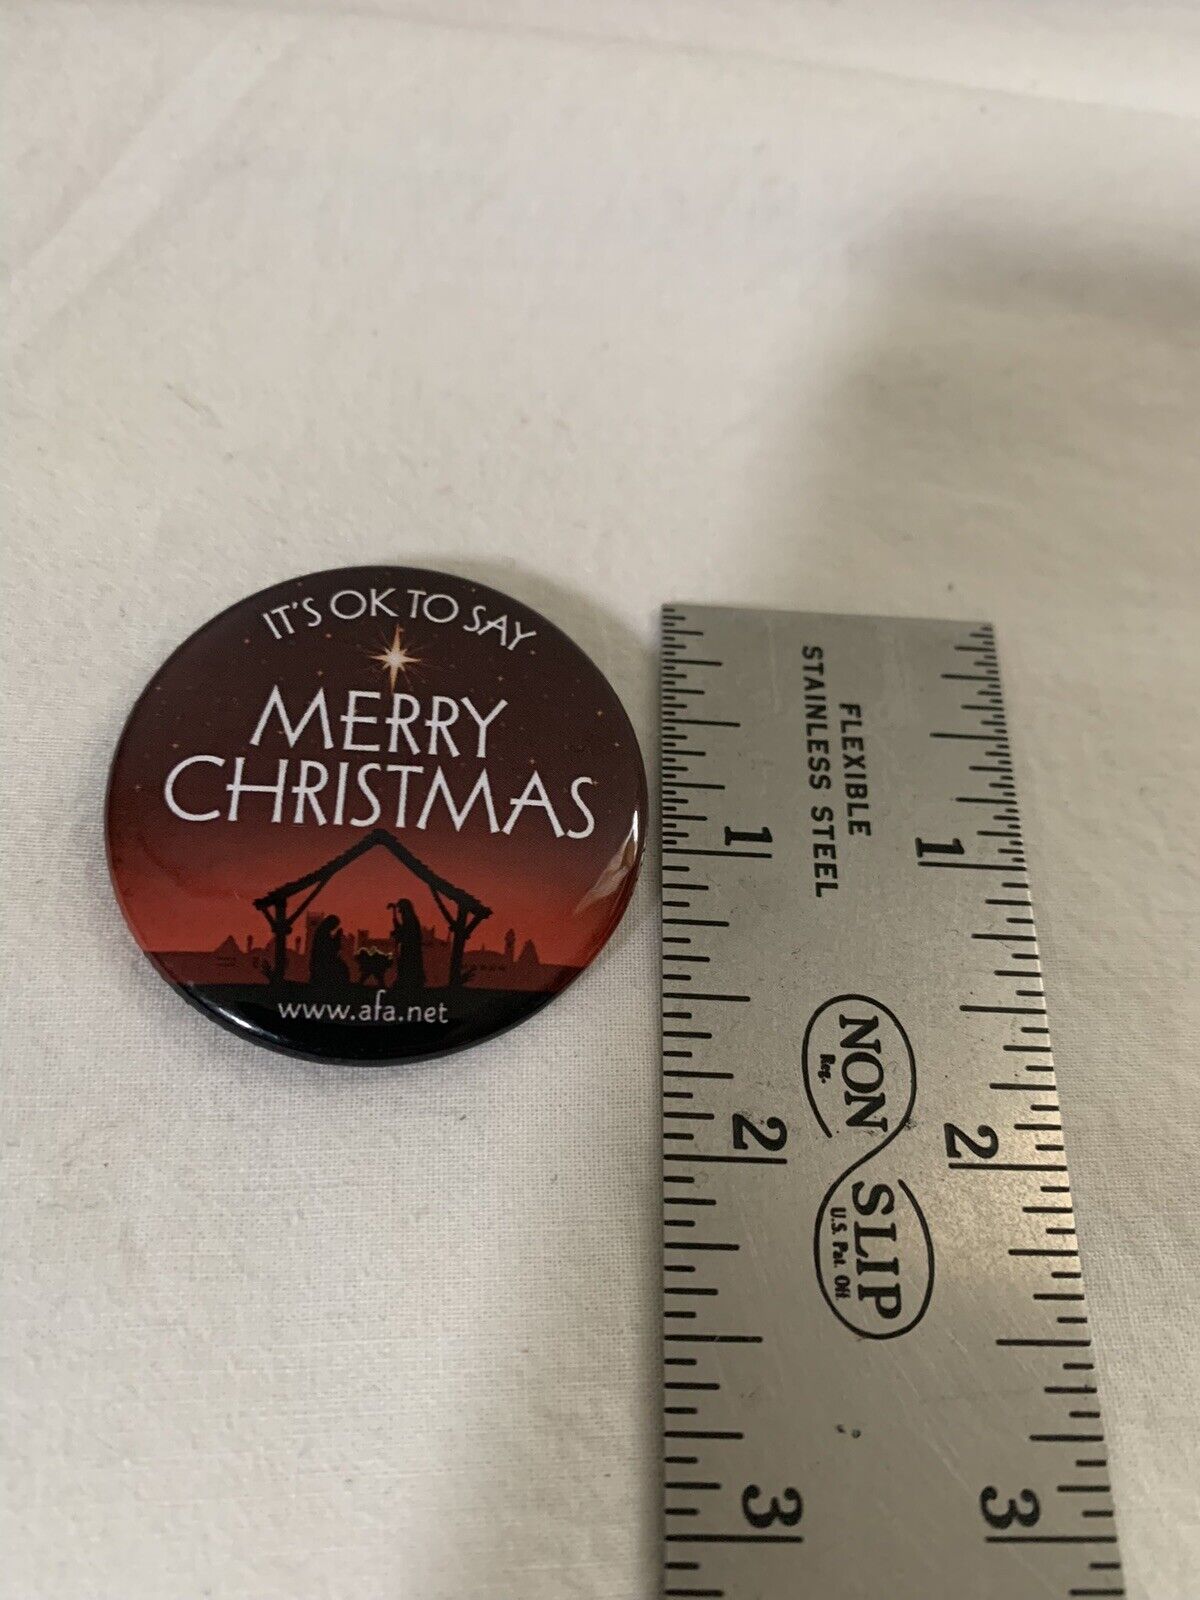 It's Ok To Say MERRY CHRISTMAS Button Pin AFA 1.75" Без бренда - фотография #4